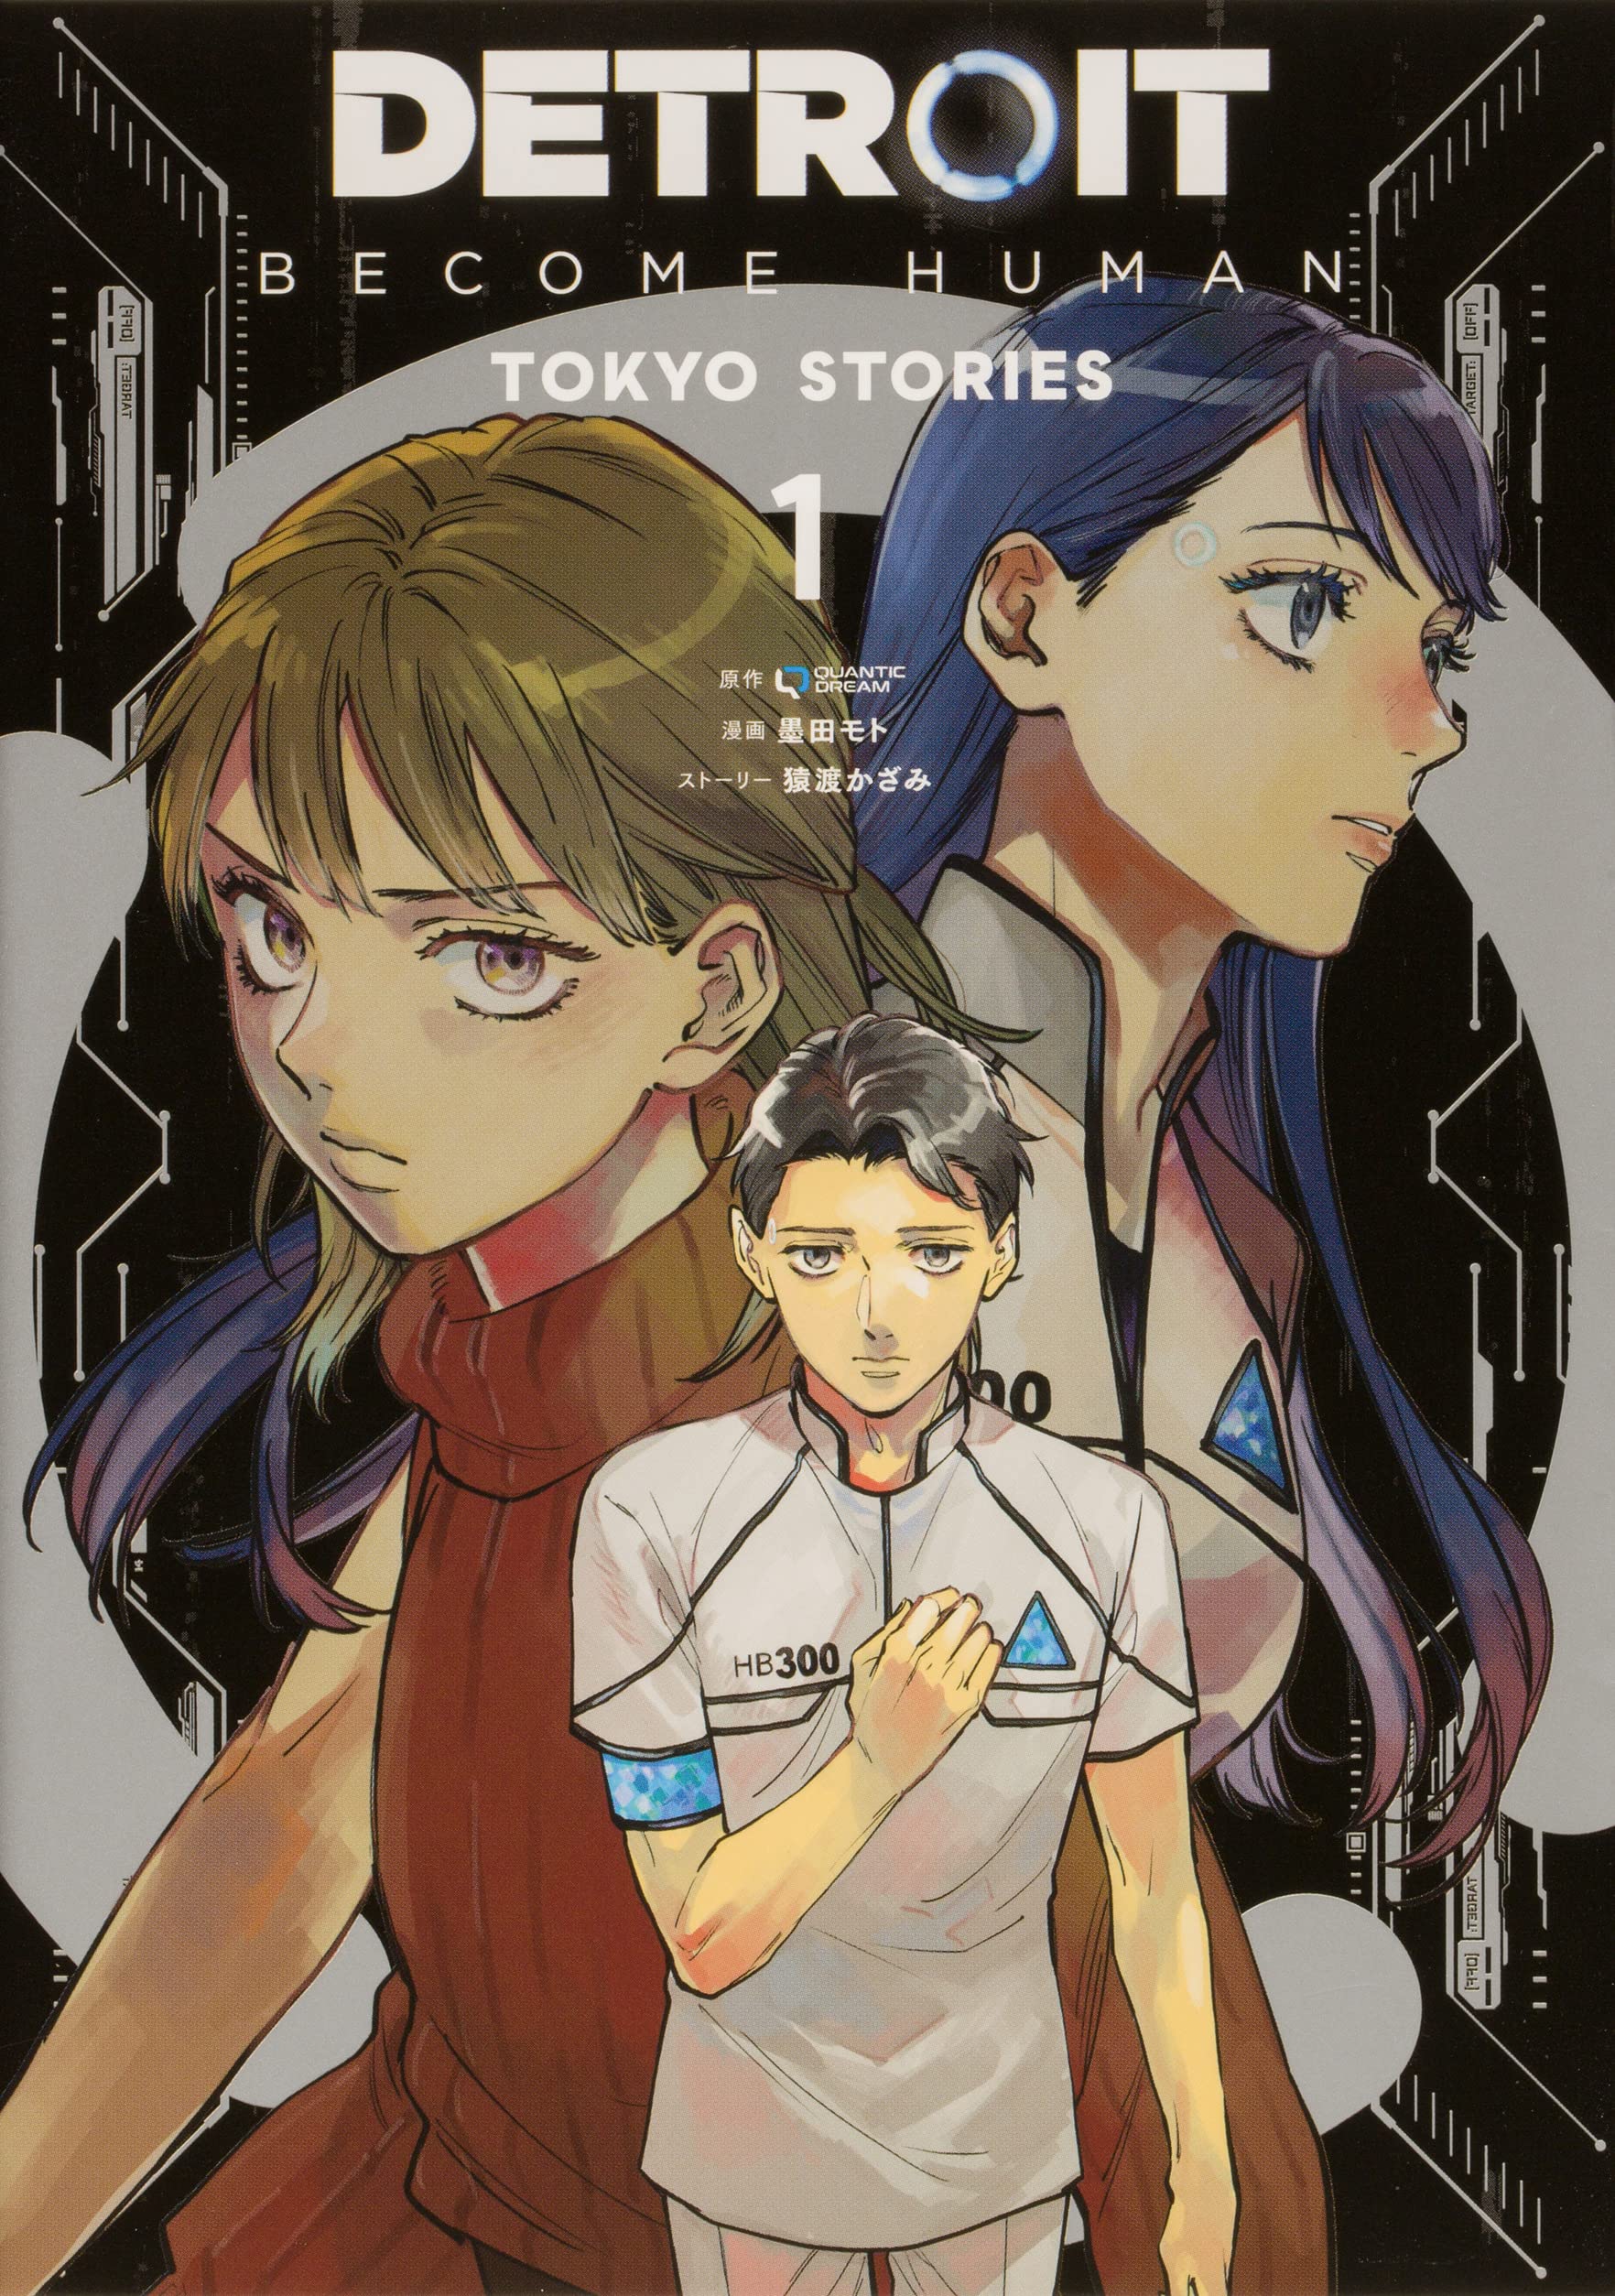 Detroit: Become Human - Tokyo Stories - MangaDex